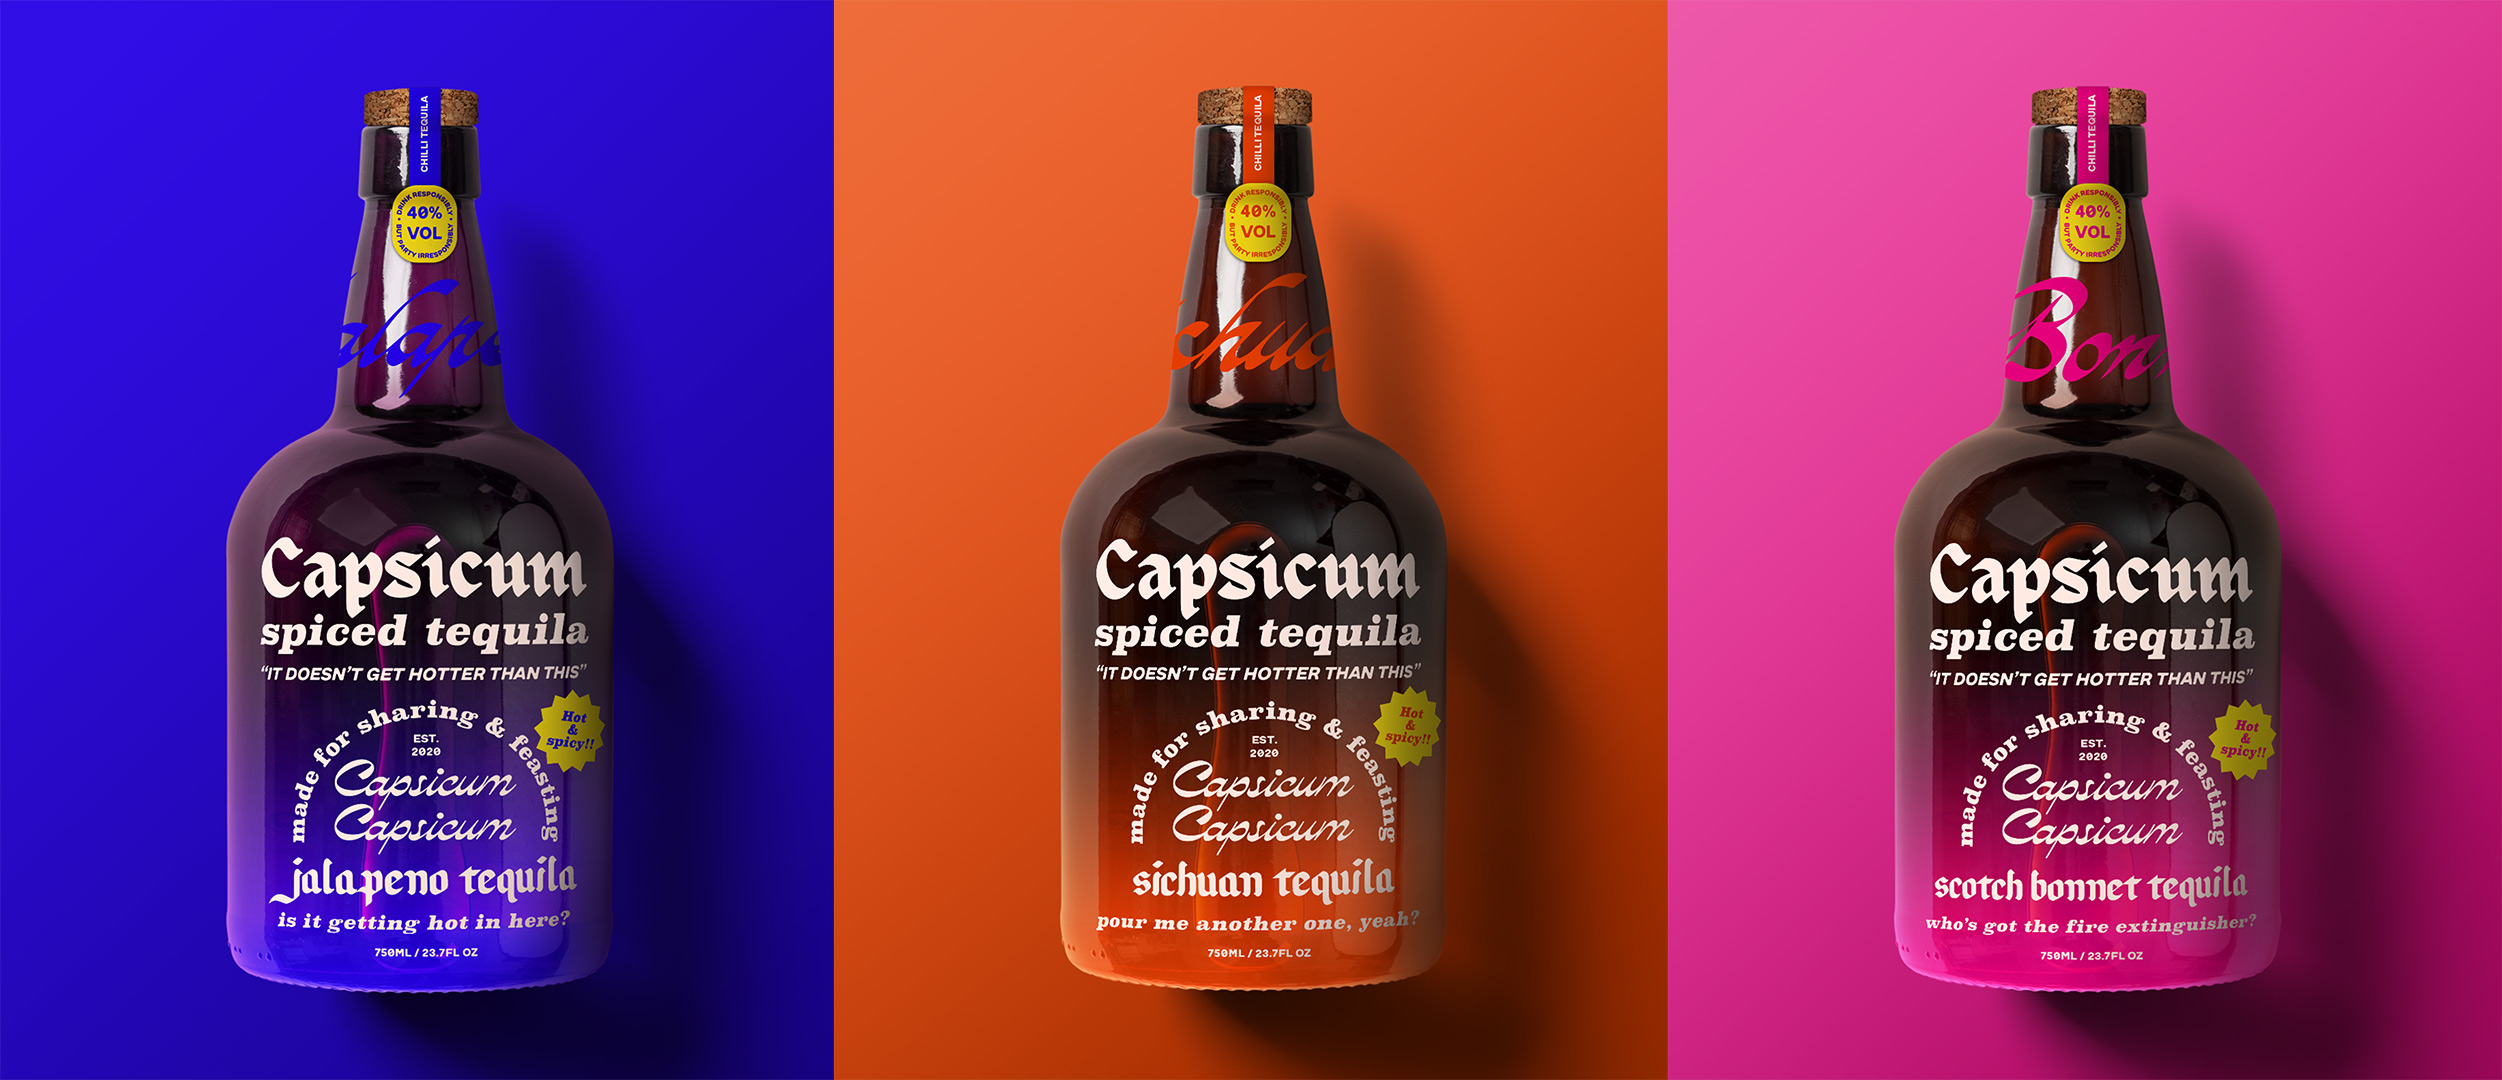 three tequila bottles of different flavours: a blue jalapeno flavour, an orange sichuan flavour and a pink scotch bonnet flavour